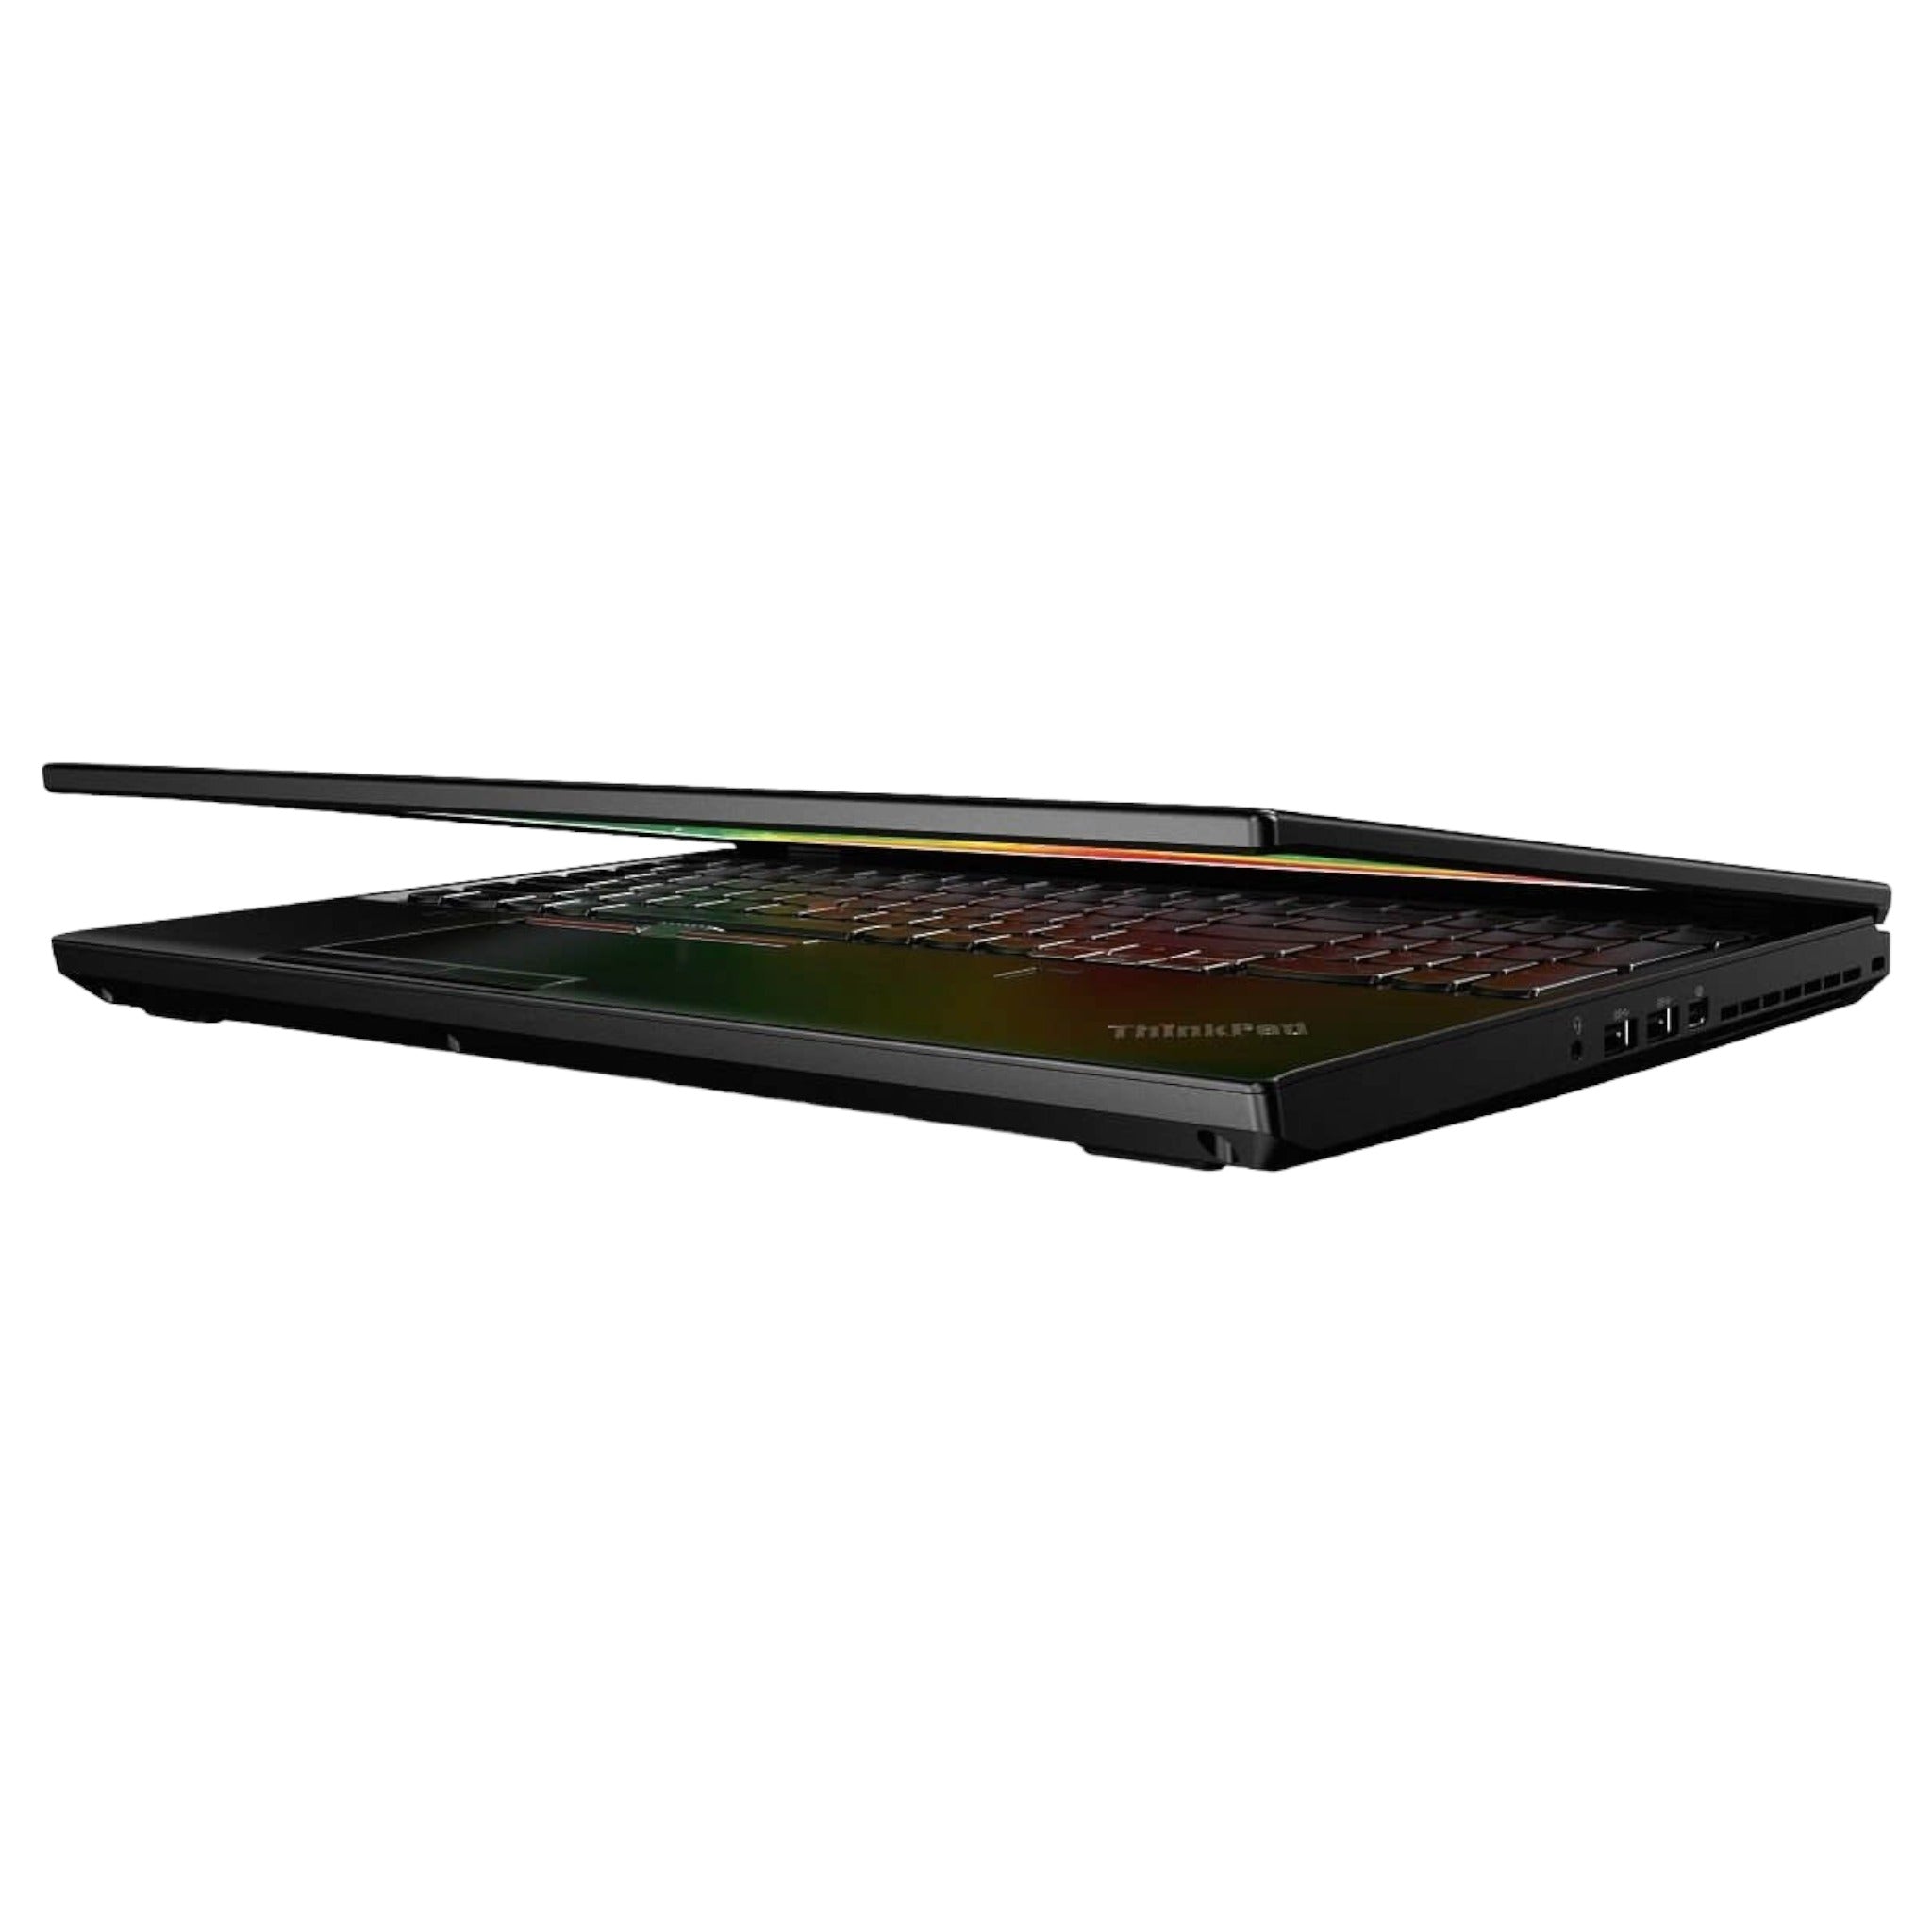 Lenovo ThinkPad P51 Core i7-7820HQ 2.90GHz 16 GB 512 GB SSD 15,6" Full HD Quadro M2200 Win 10 Pro - computify